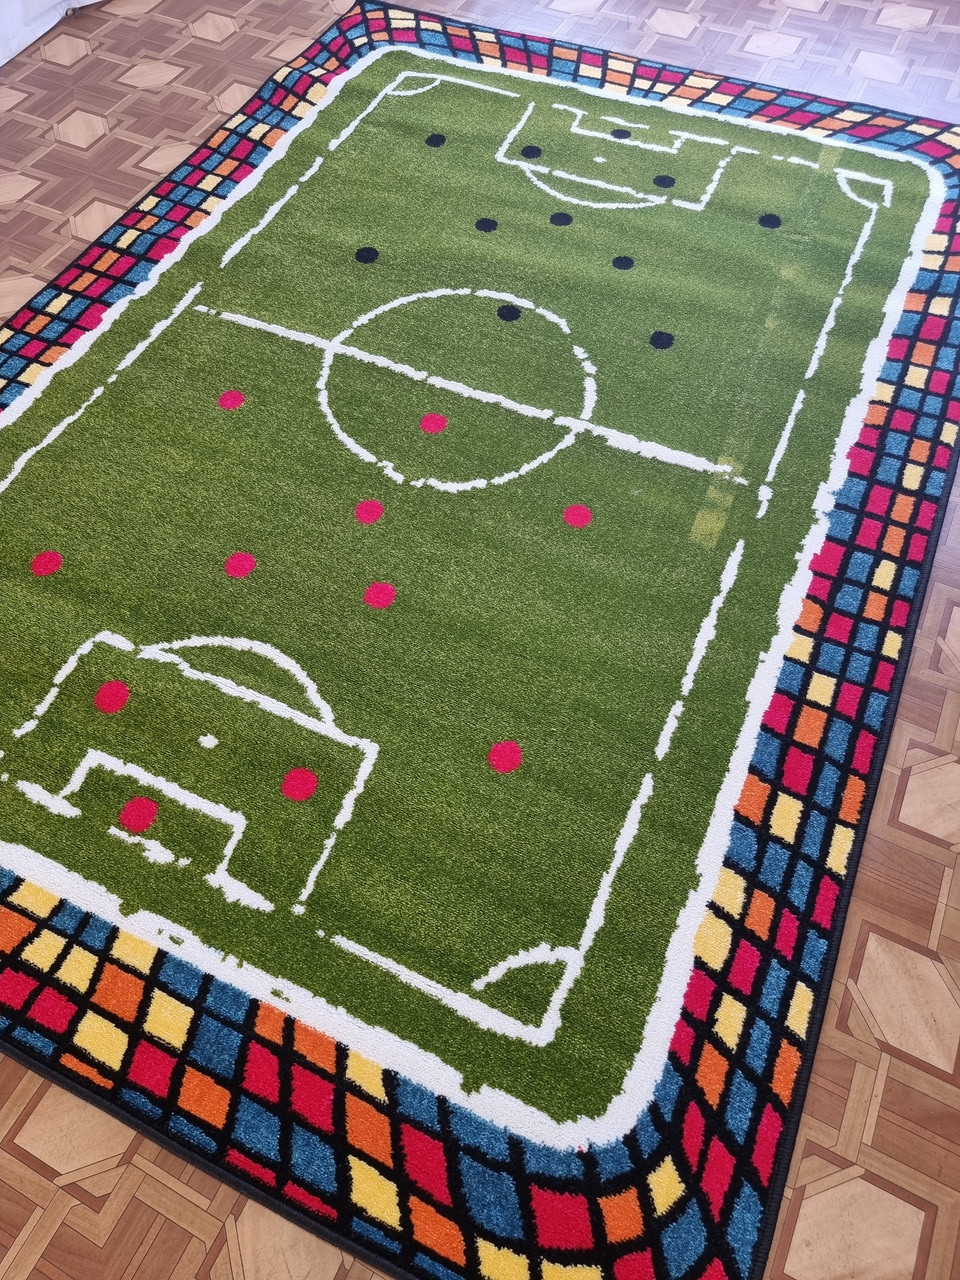 Дитячий килим  Футбольне поле 2х3